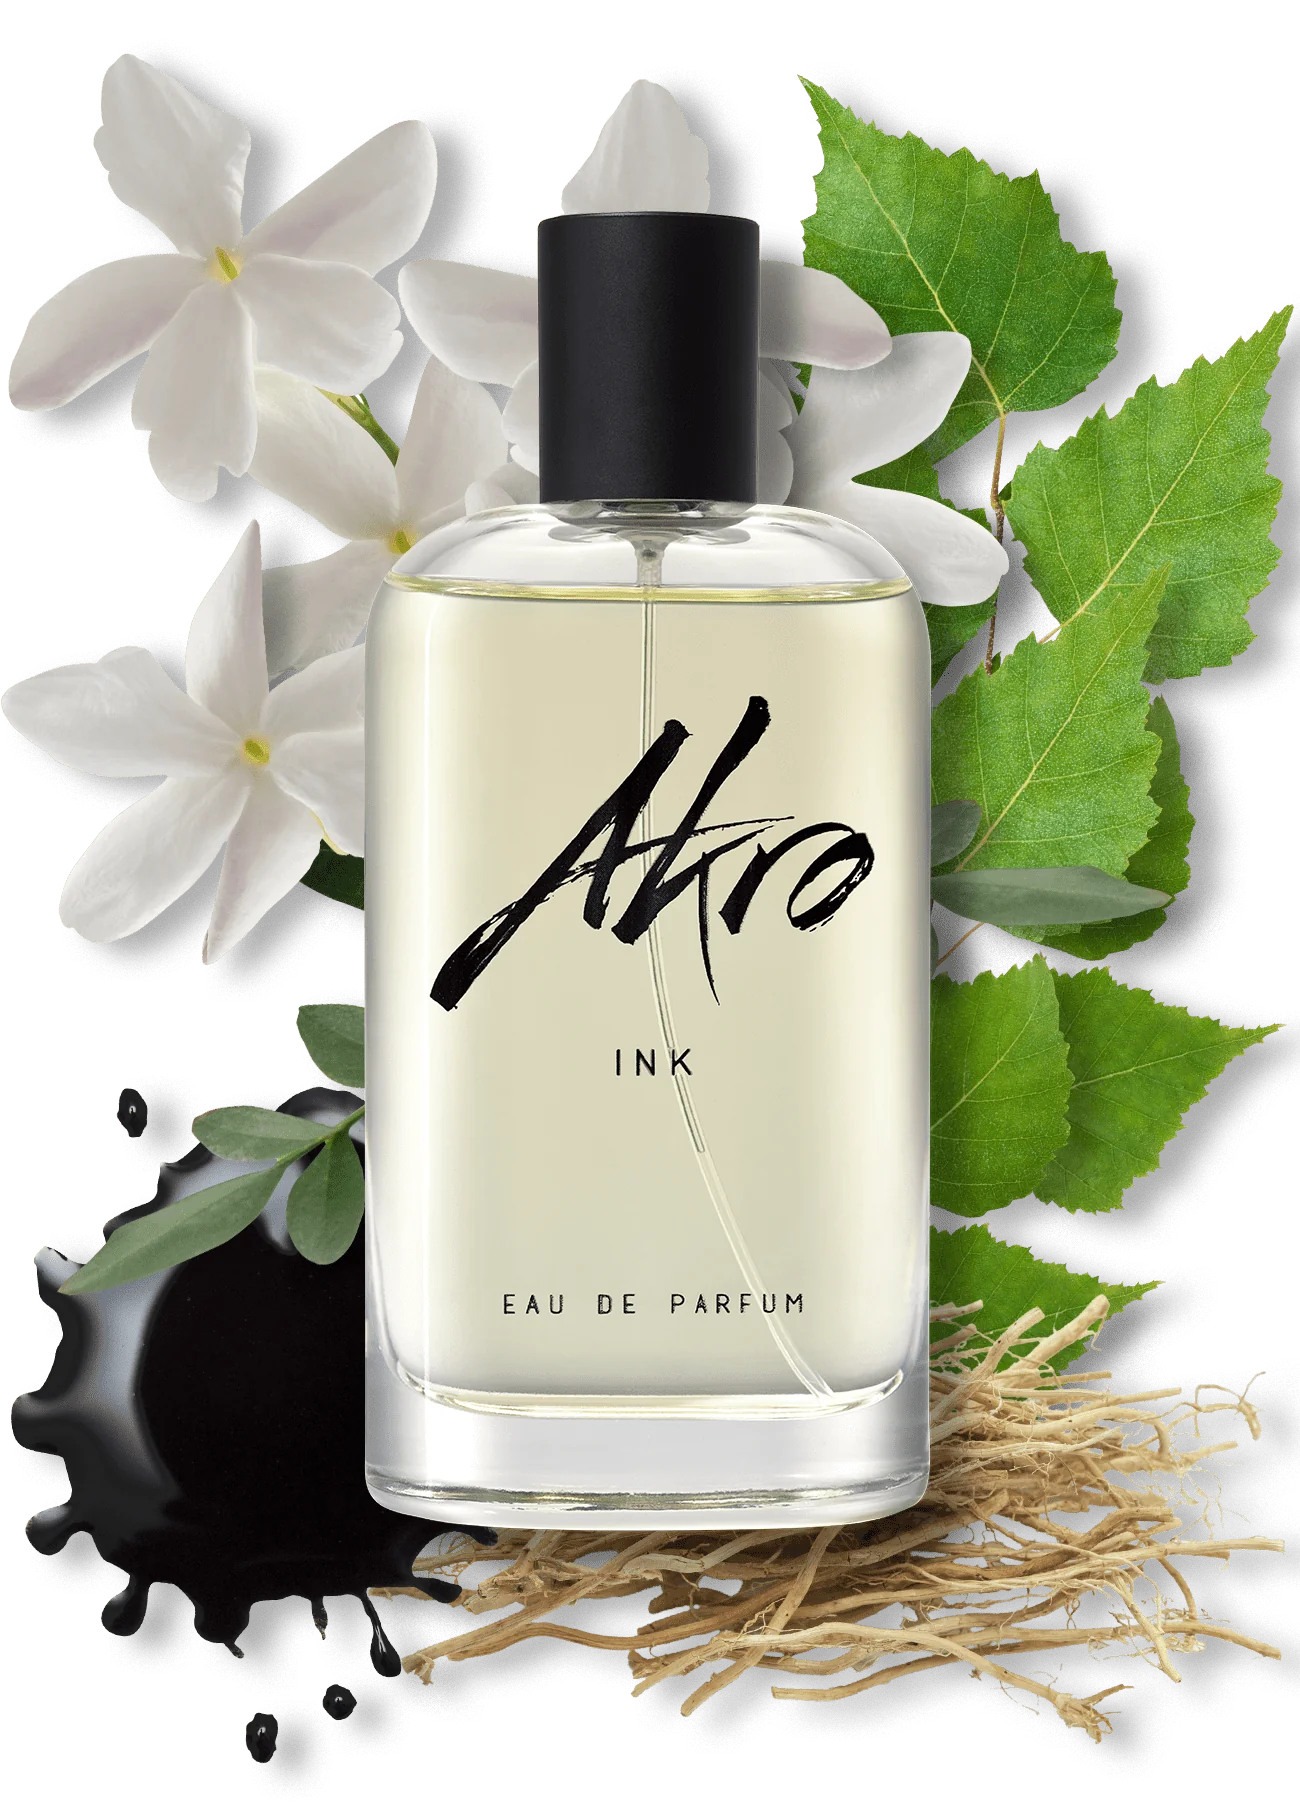 Akro Ink Eau De Parfum 100ml